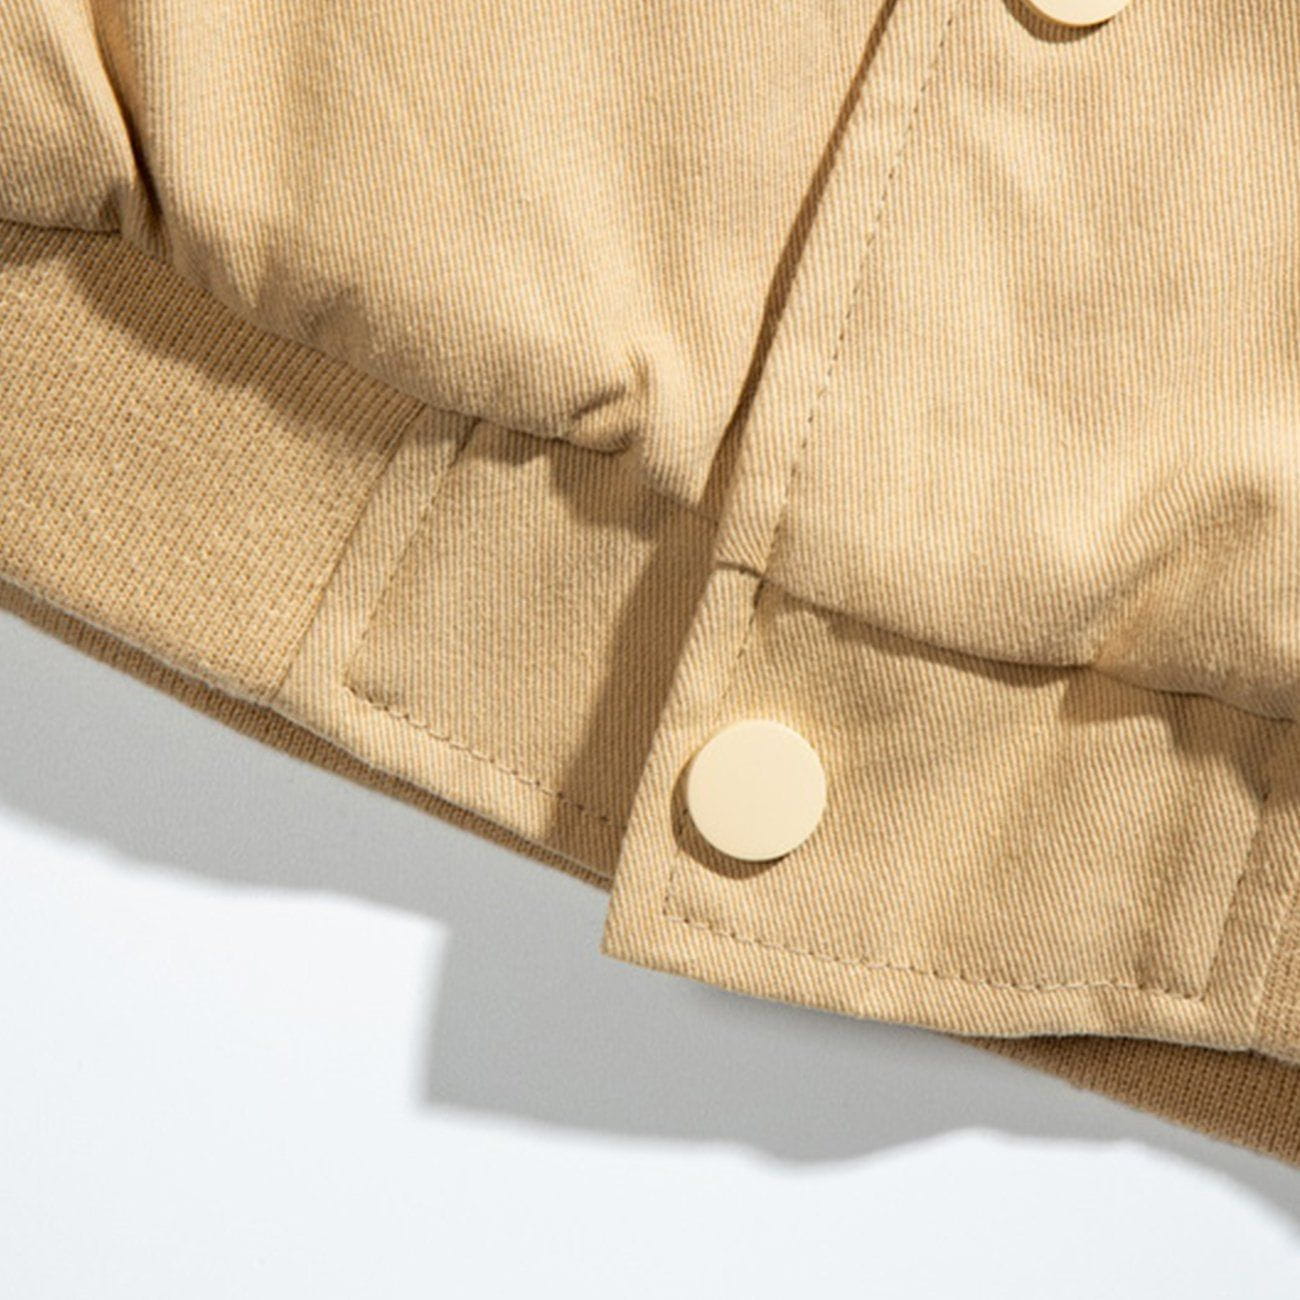 Majesda® - Large Letter Embroidery Jacket outfit ideas, streetwear fashion - majesda.com